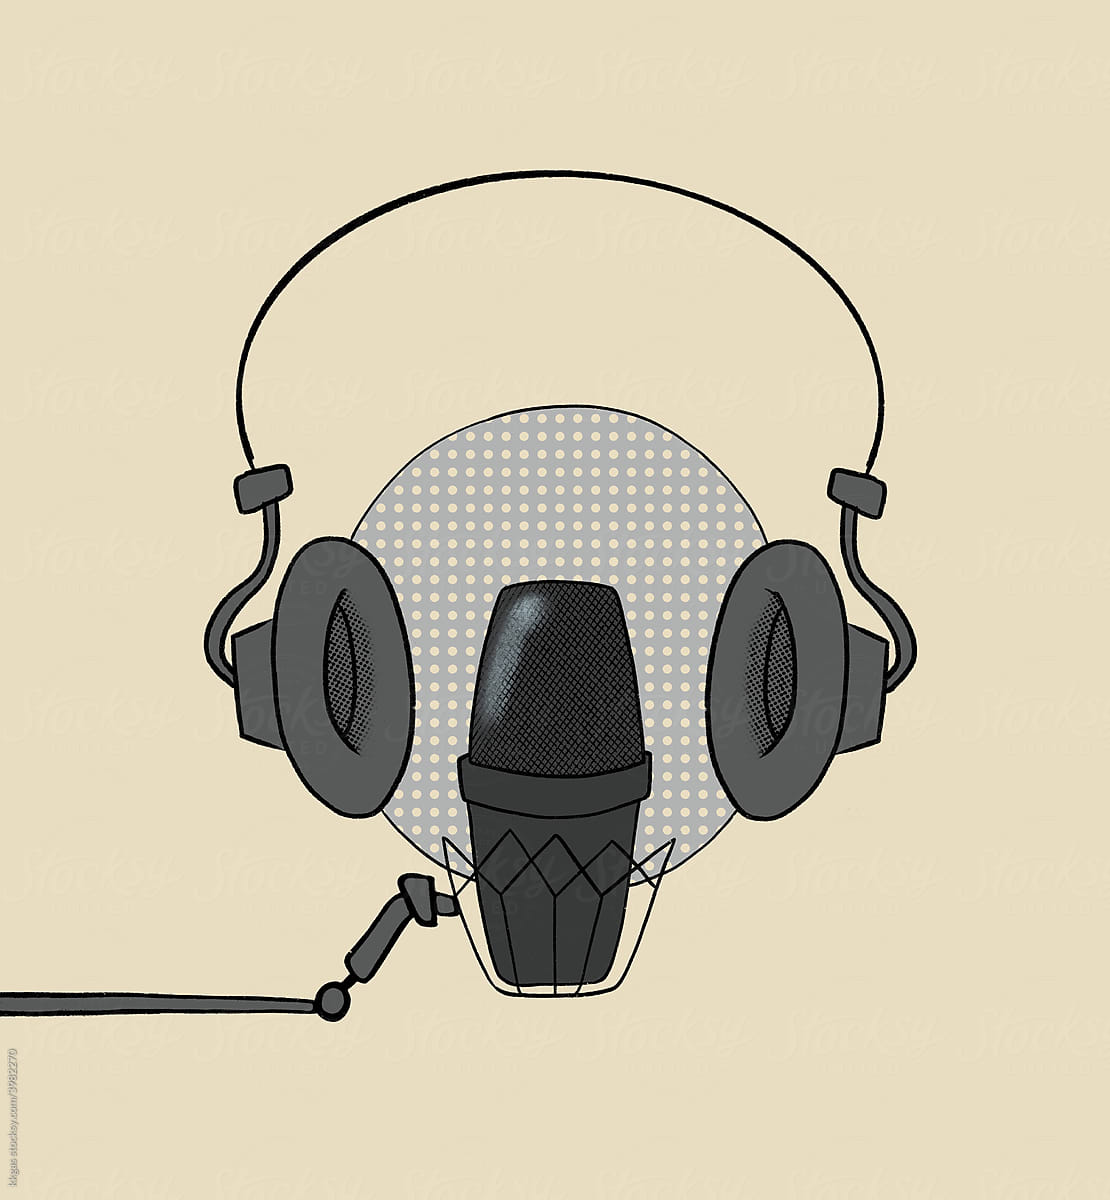 Podcast concept illustration